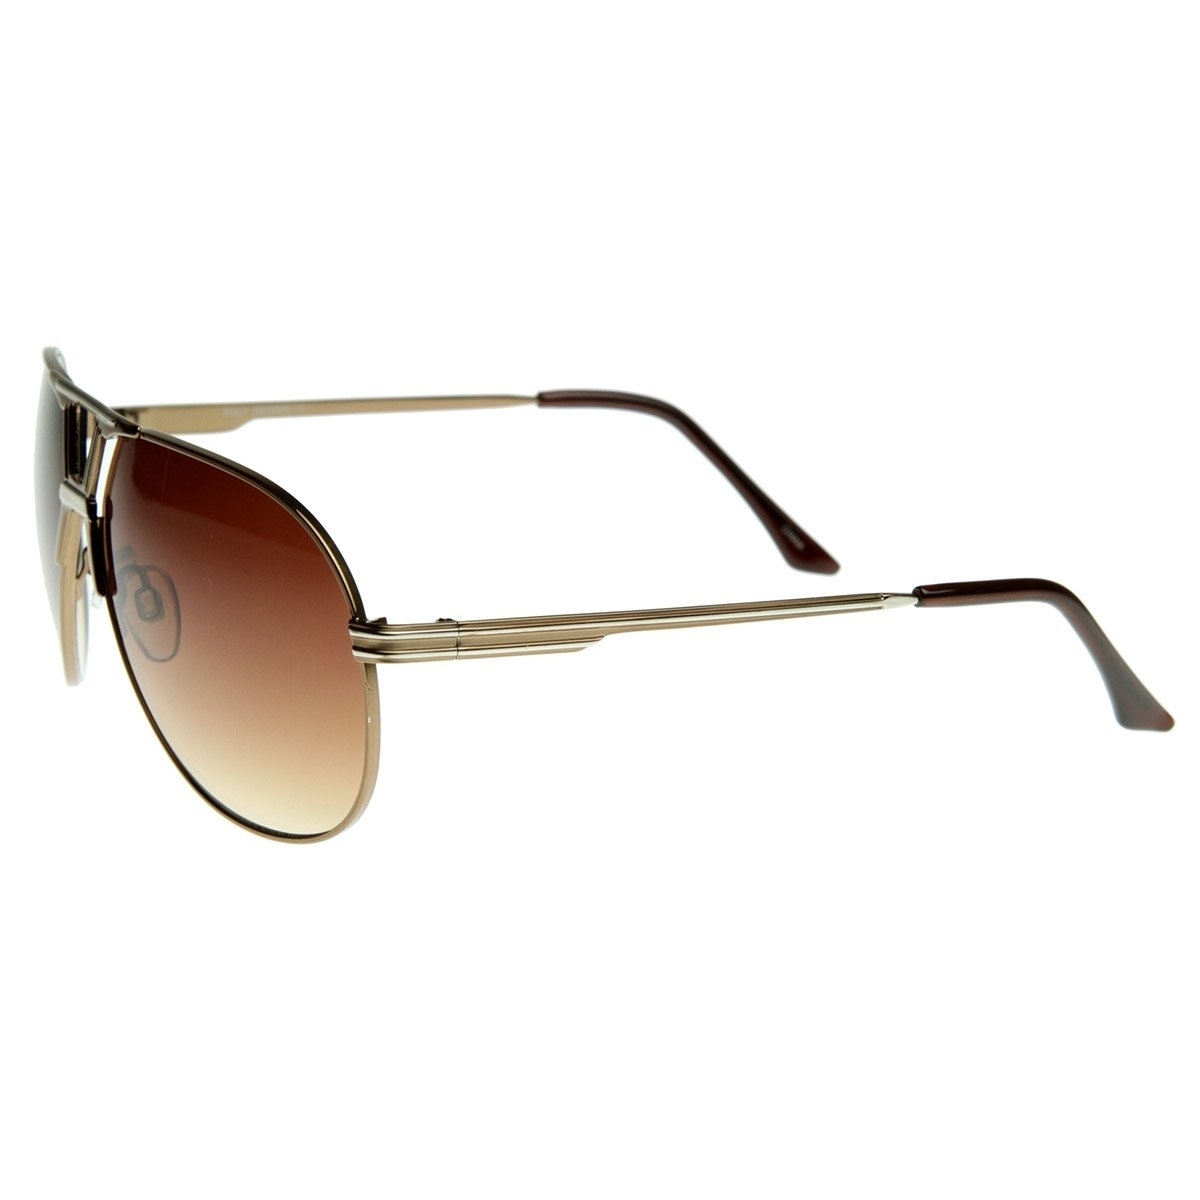 Optical Quality Avant-Garde Design Metal Aviator Sunglasses - Gunmetal/Smoke